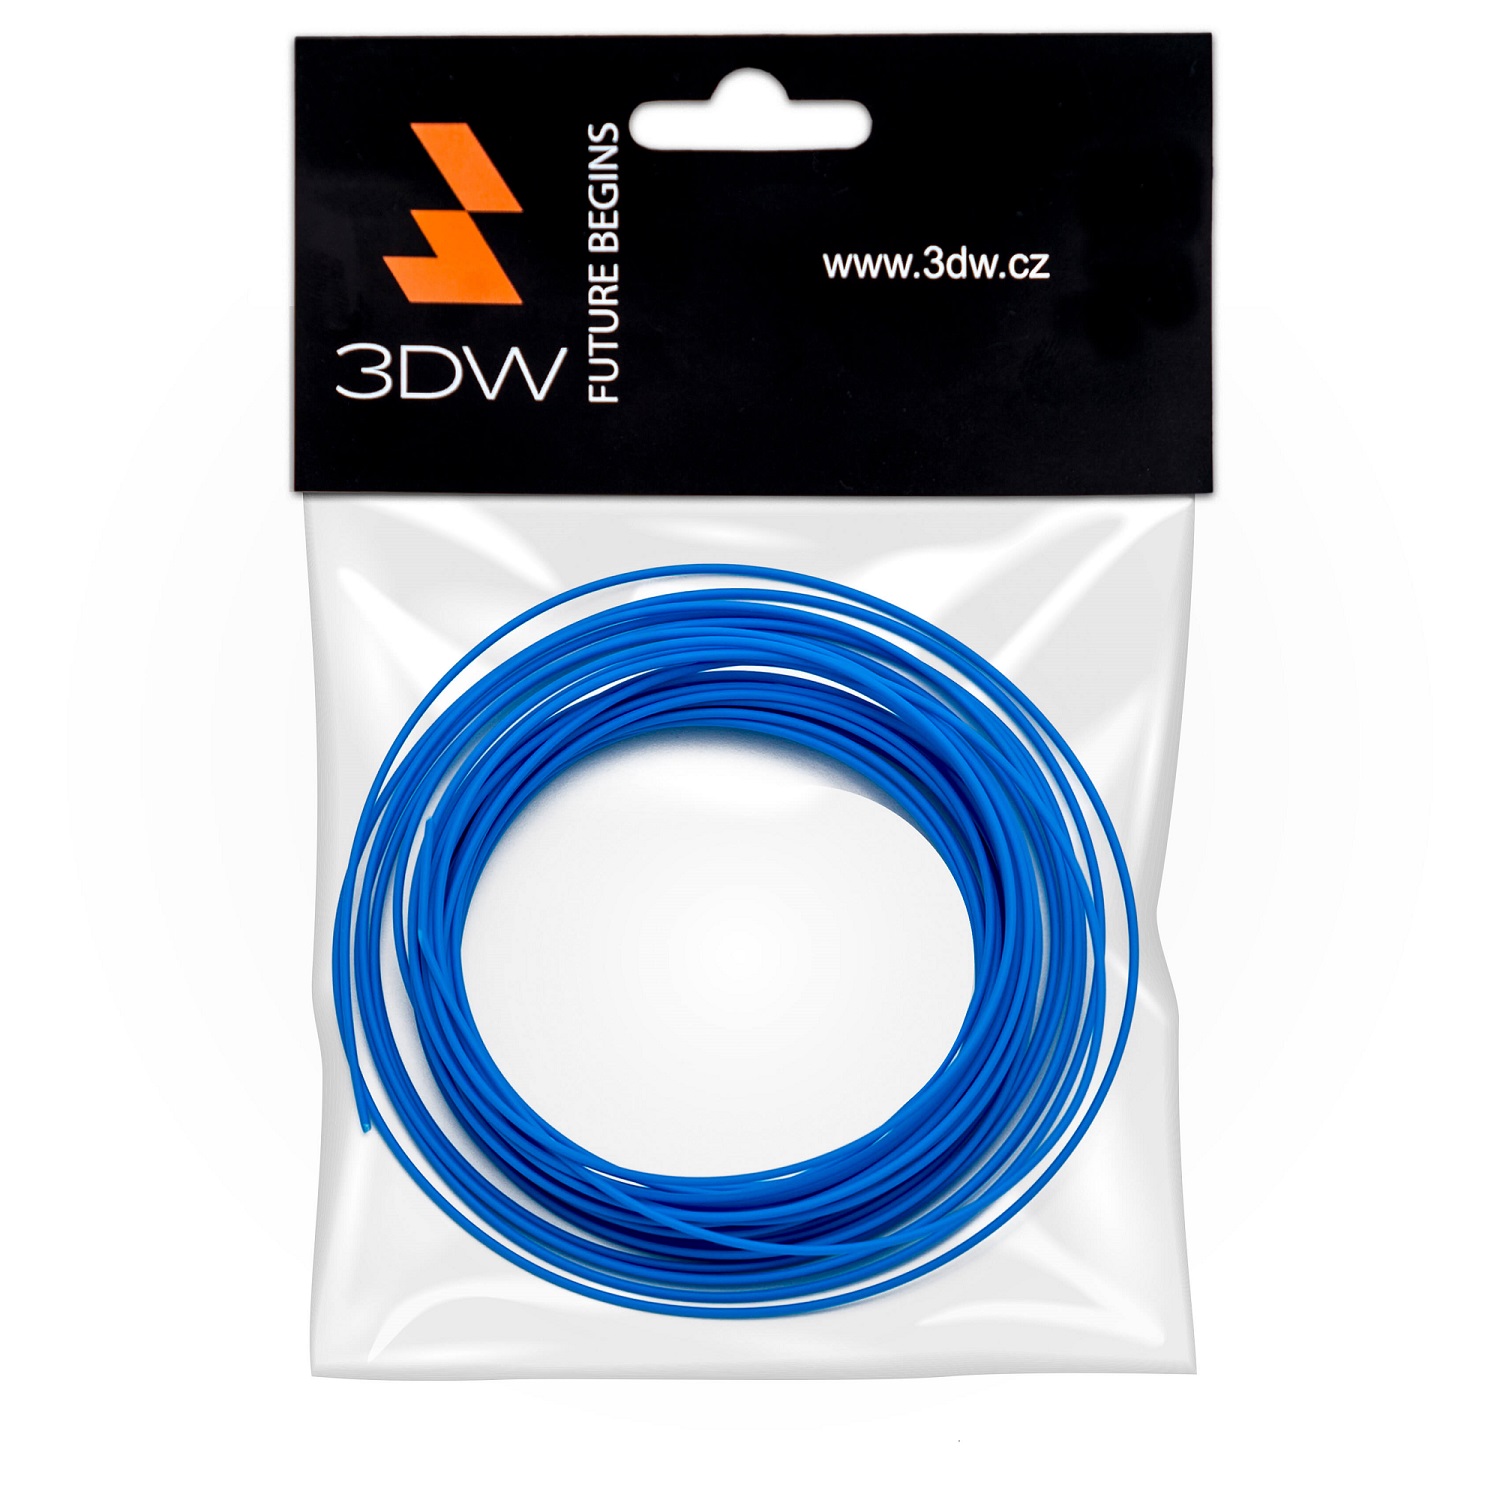 Tisková struna 3DW (filament) ABS, 1,75mm, 10m, modrá, 220-250°C